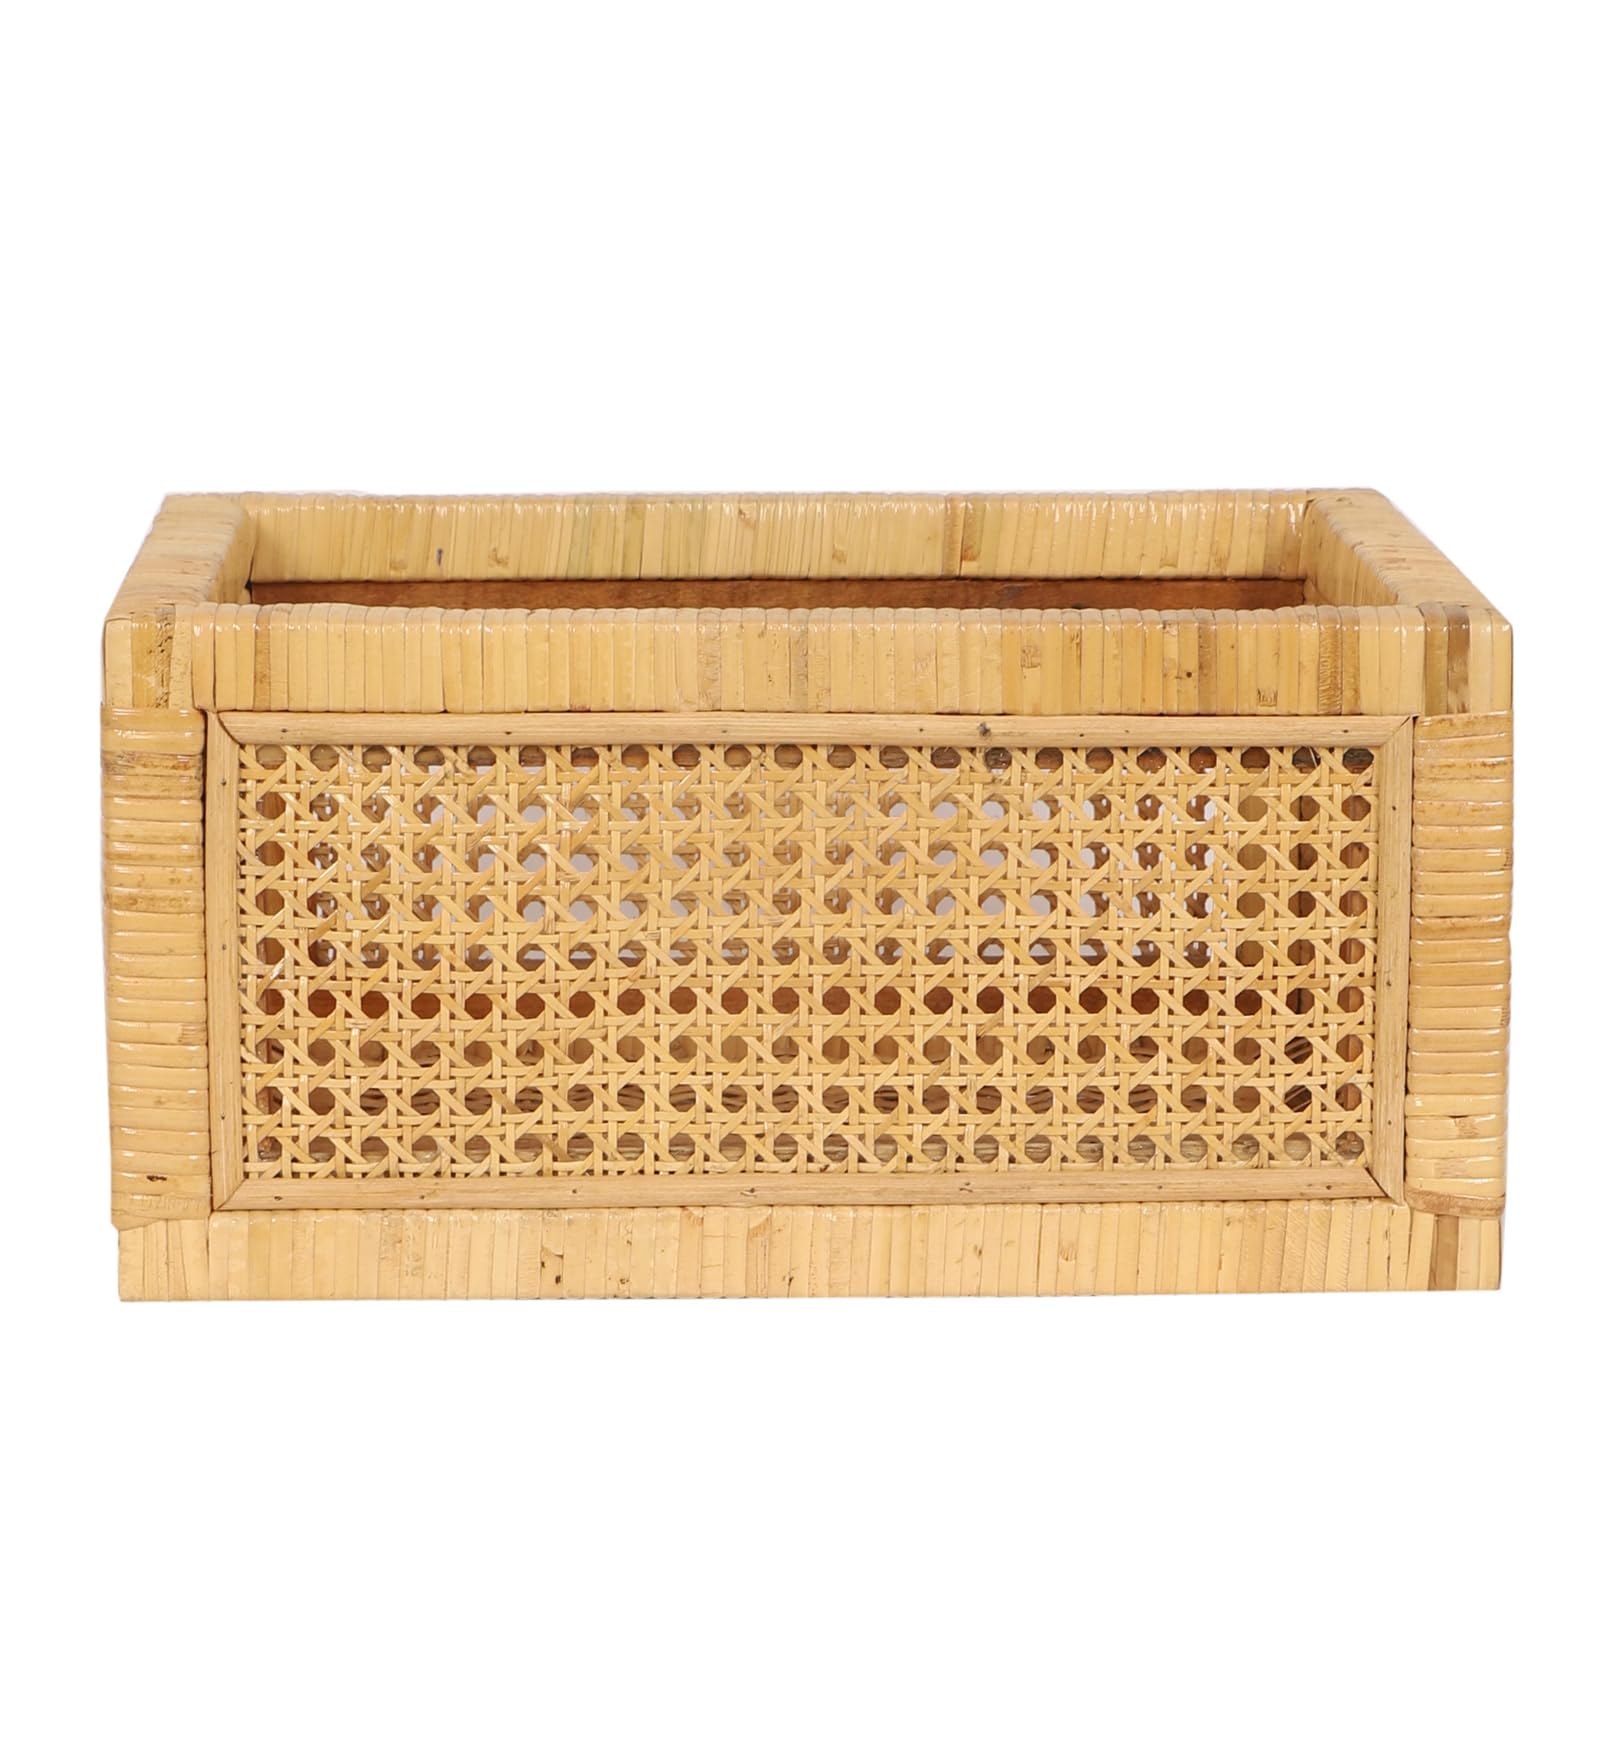 Akway Rattan cane webbing Storage basket | Wicker basket for storage organizer | Kauna Grass storage basket For Home | Kitchn Living Room - (Small, Beige)- Akway